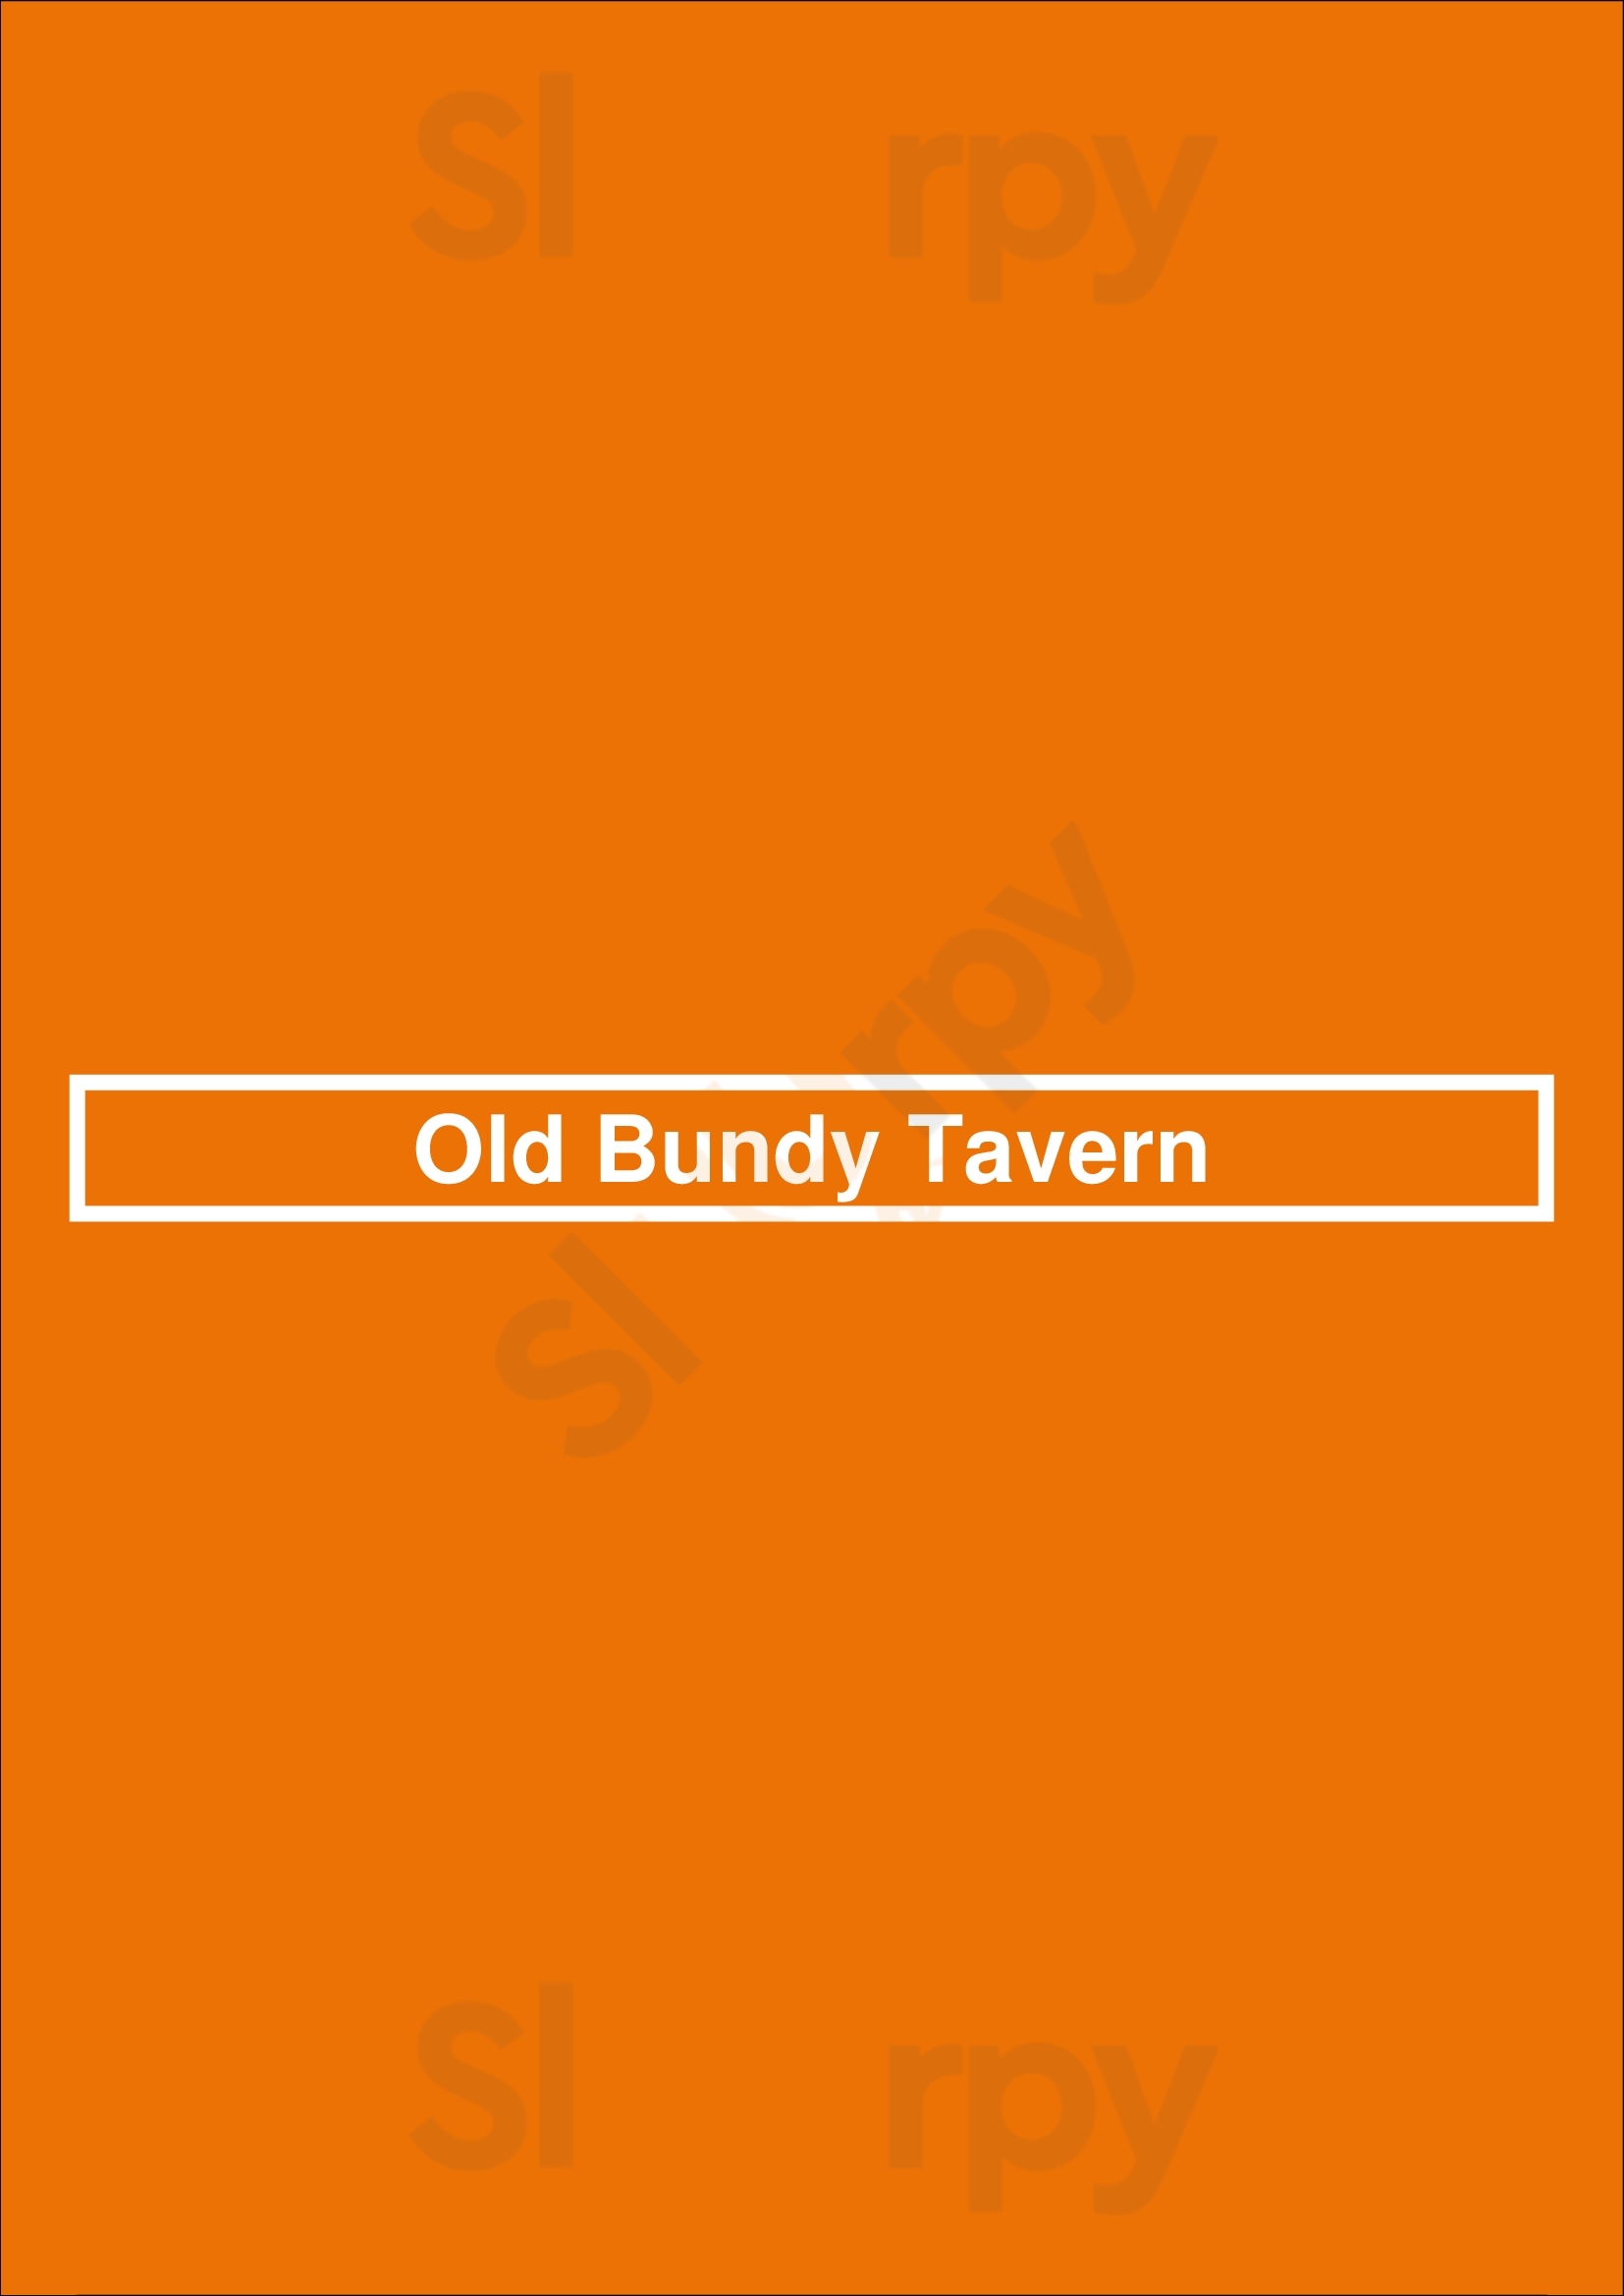 Old Bundy Tavern Bundaberg Menu - 1